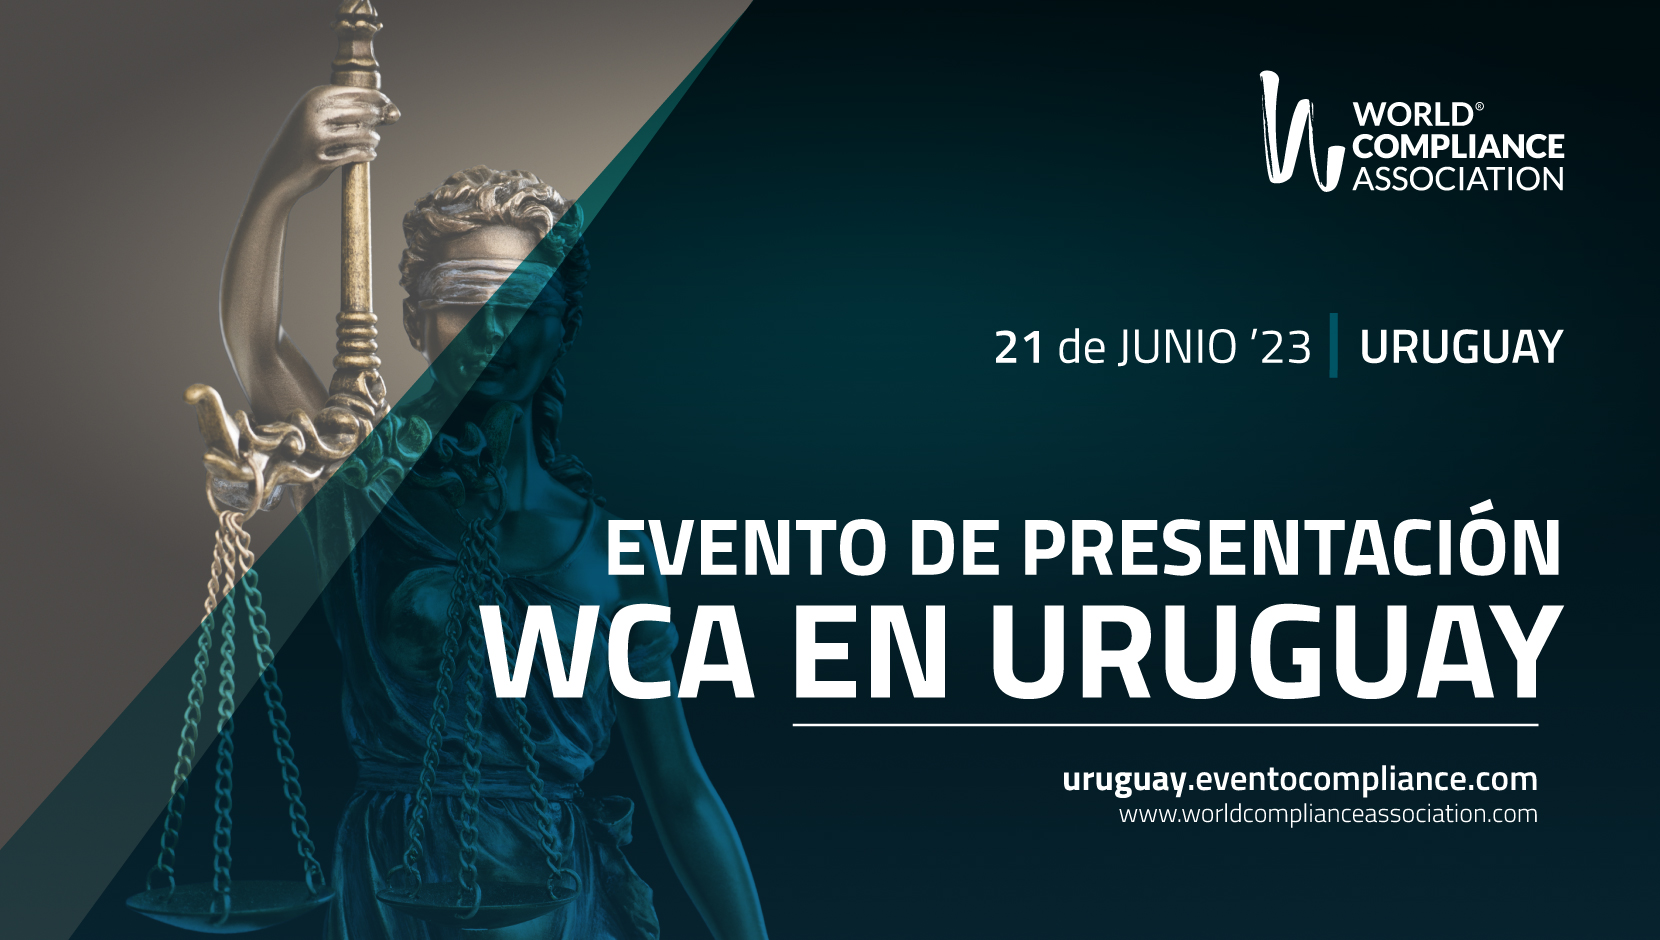 https://uruguay.eventocompliance.com/index_v3.php